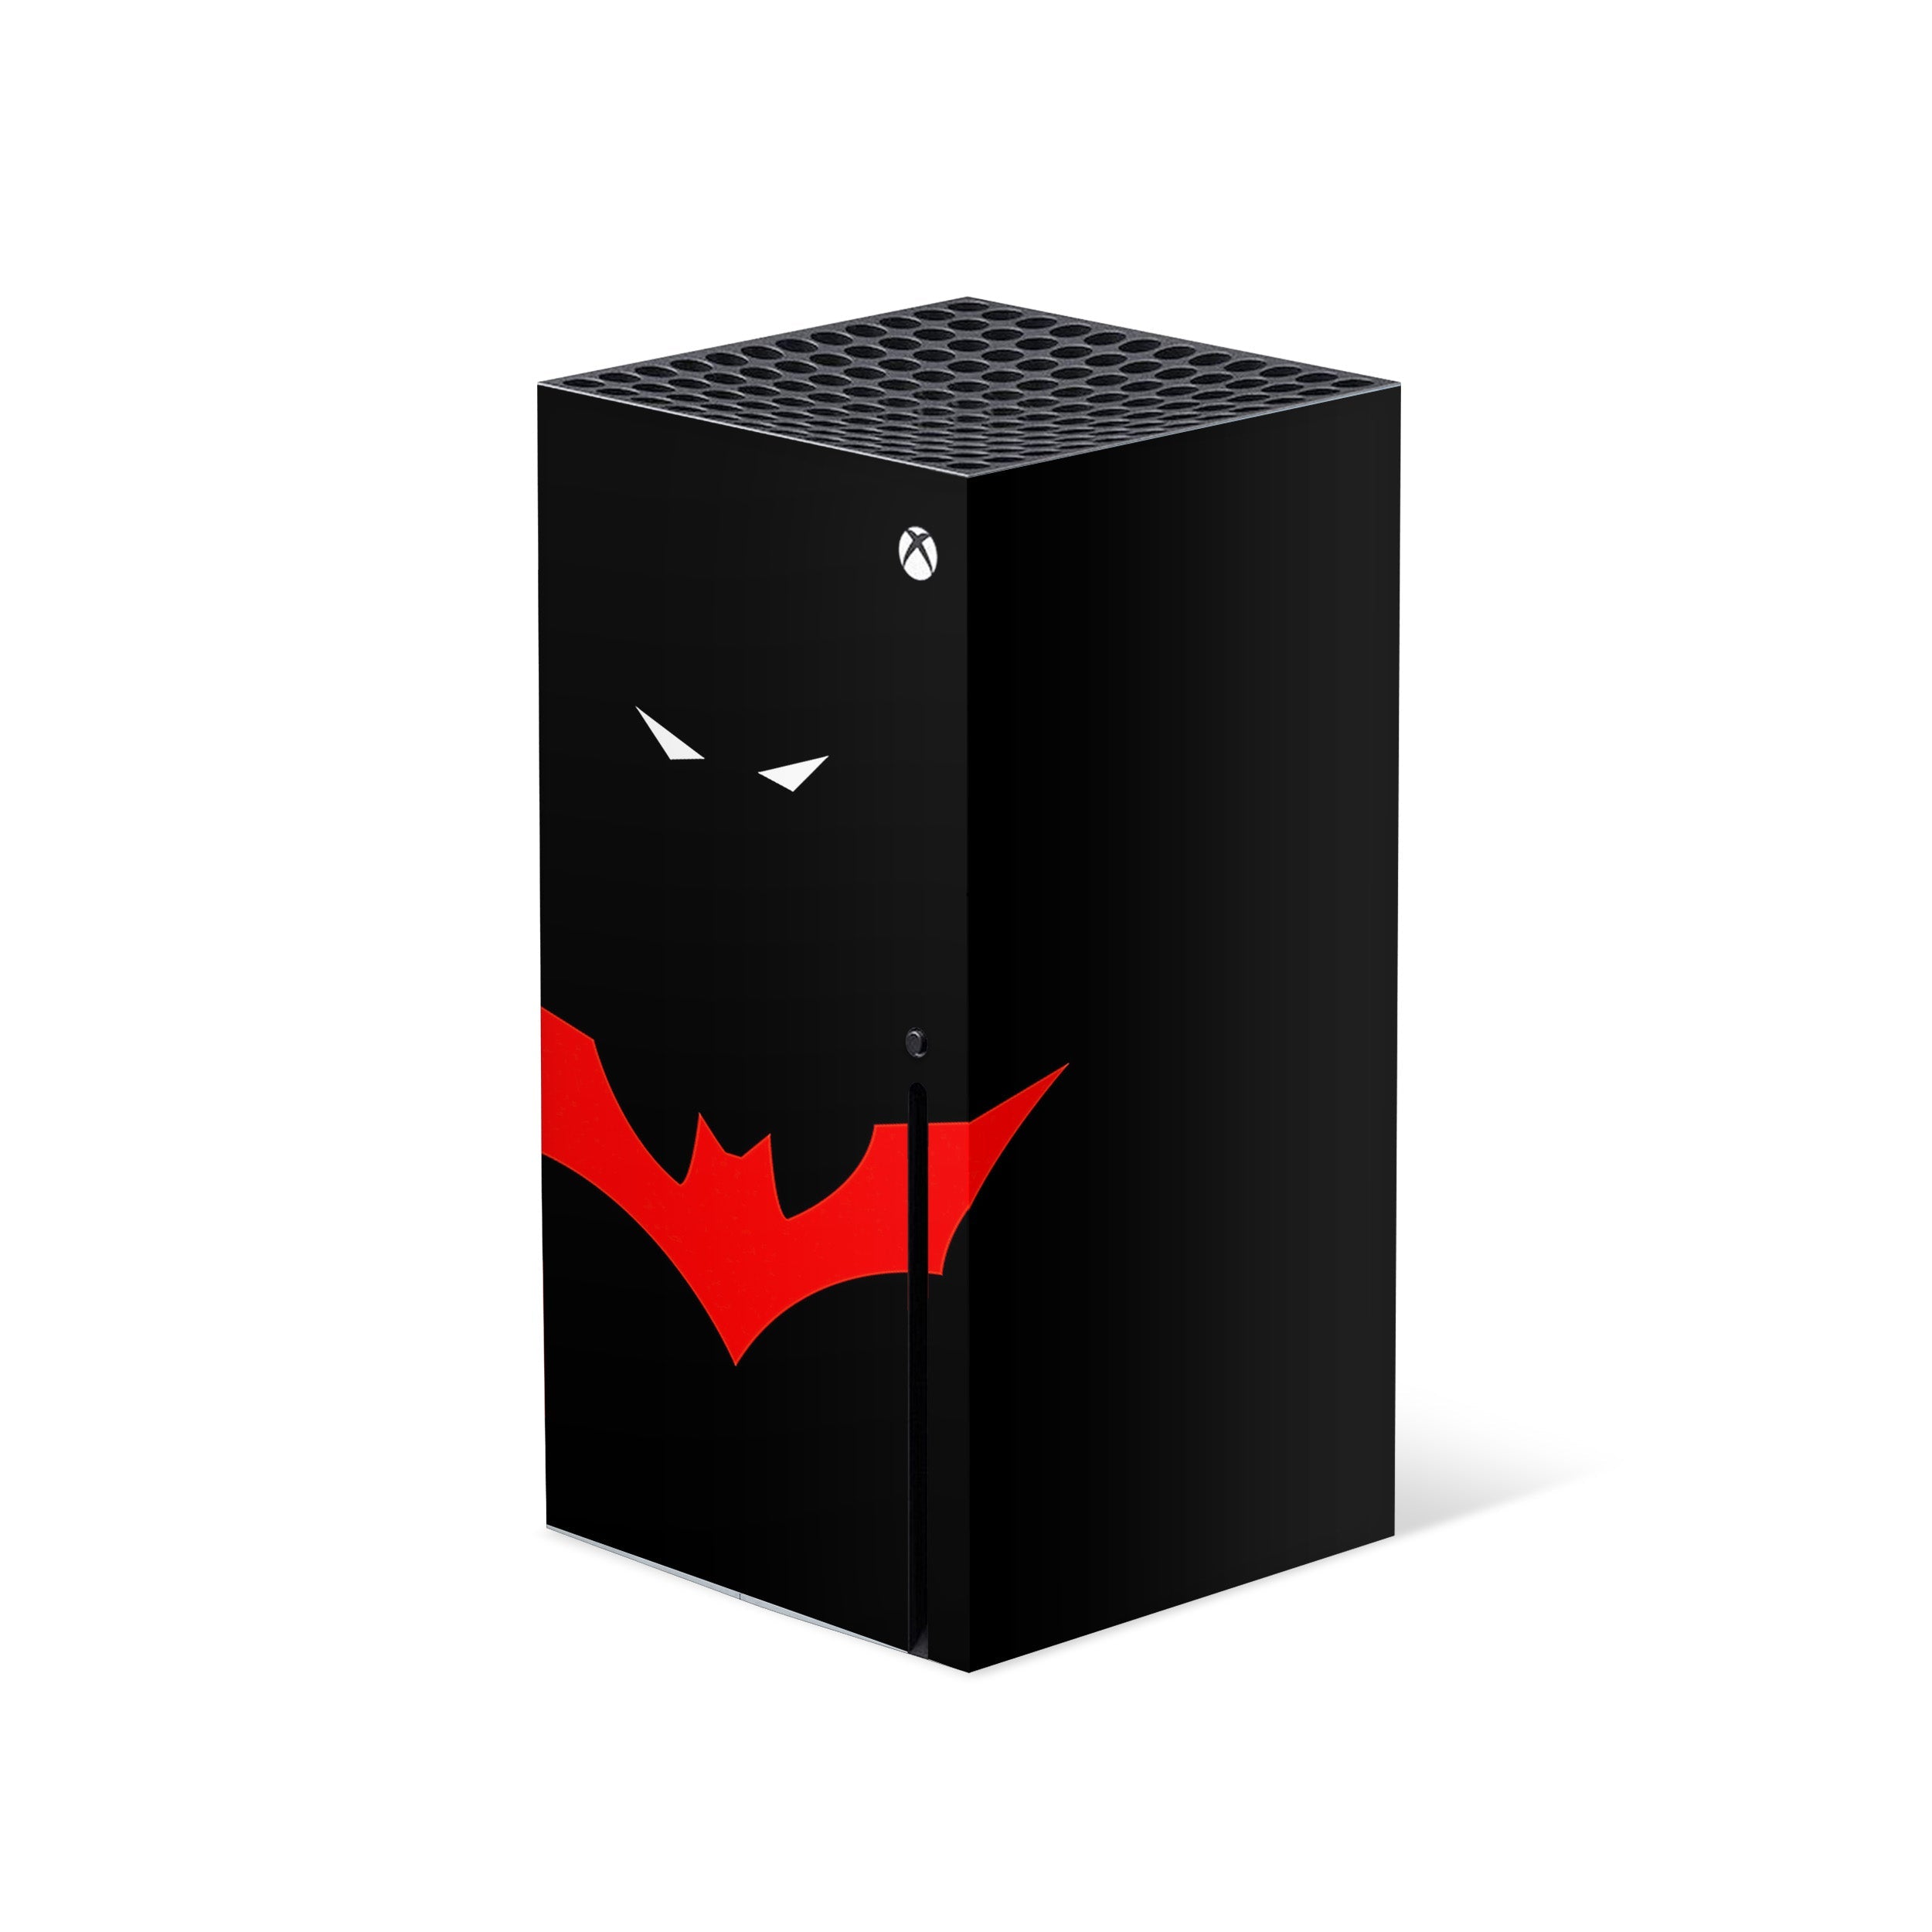 A video game skin featuring a DC Batman design for the Xbox Series X.